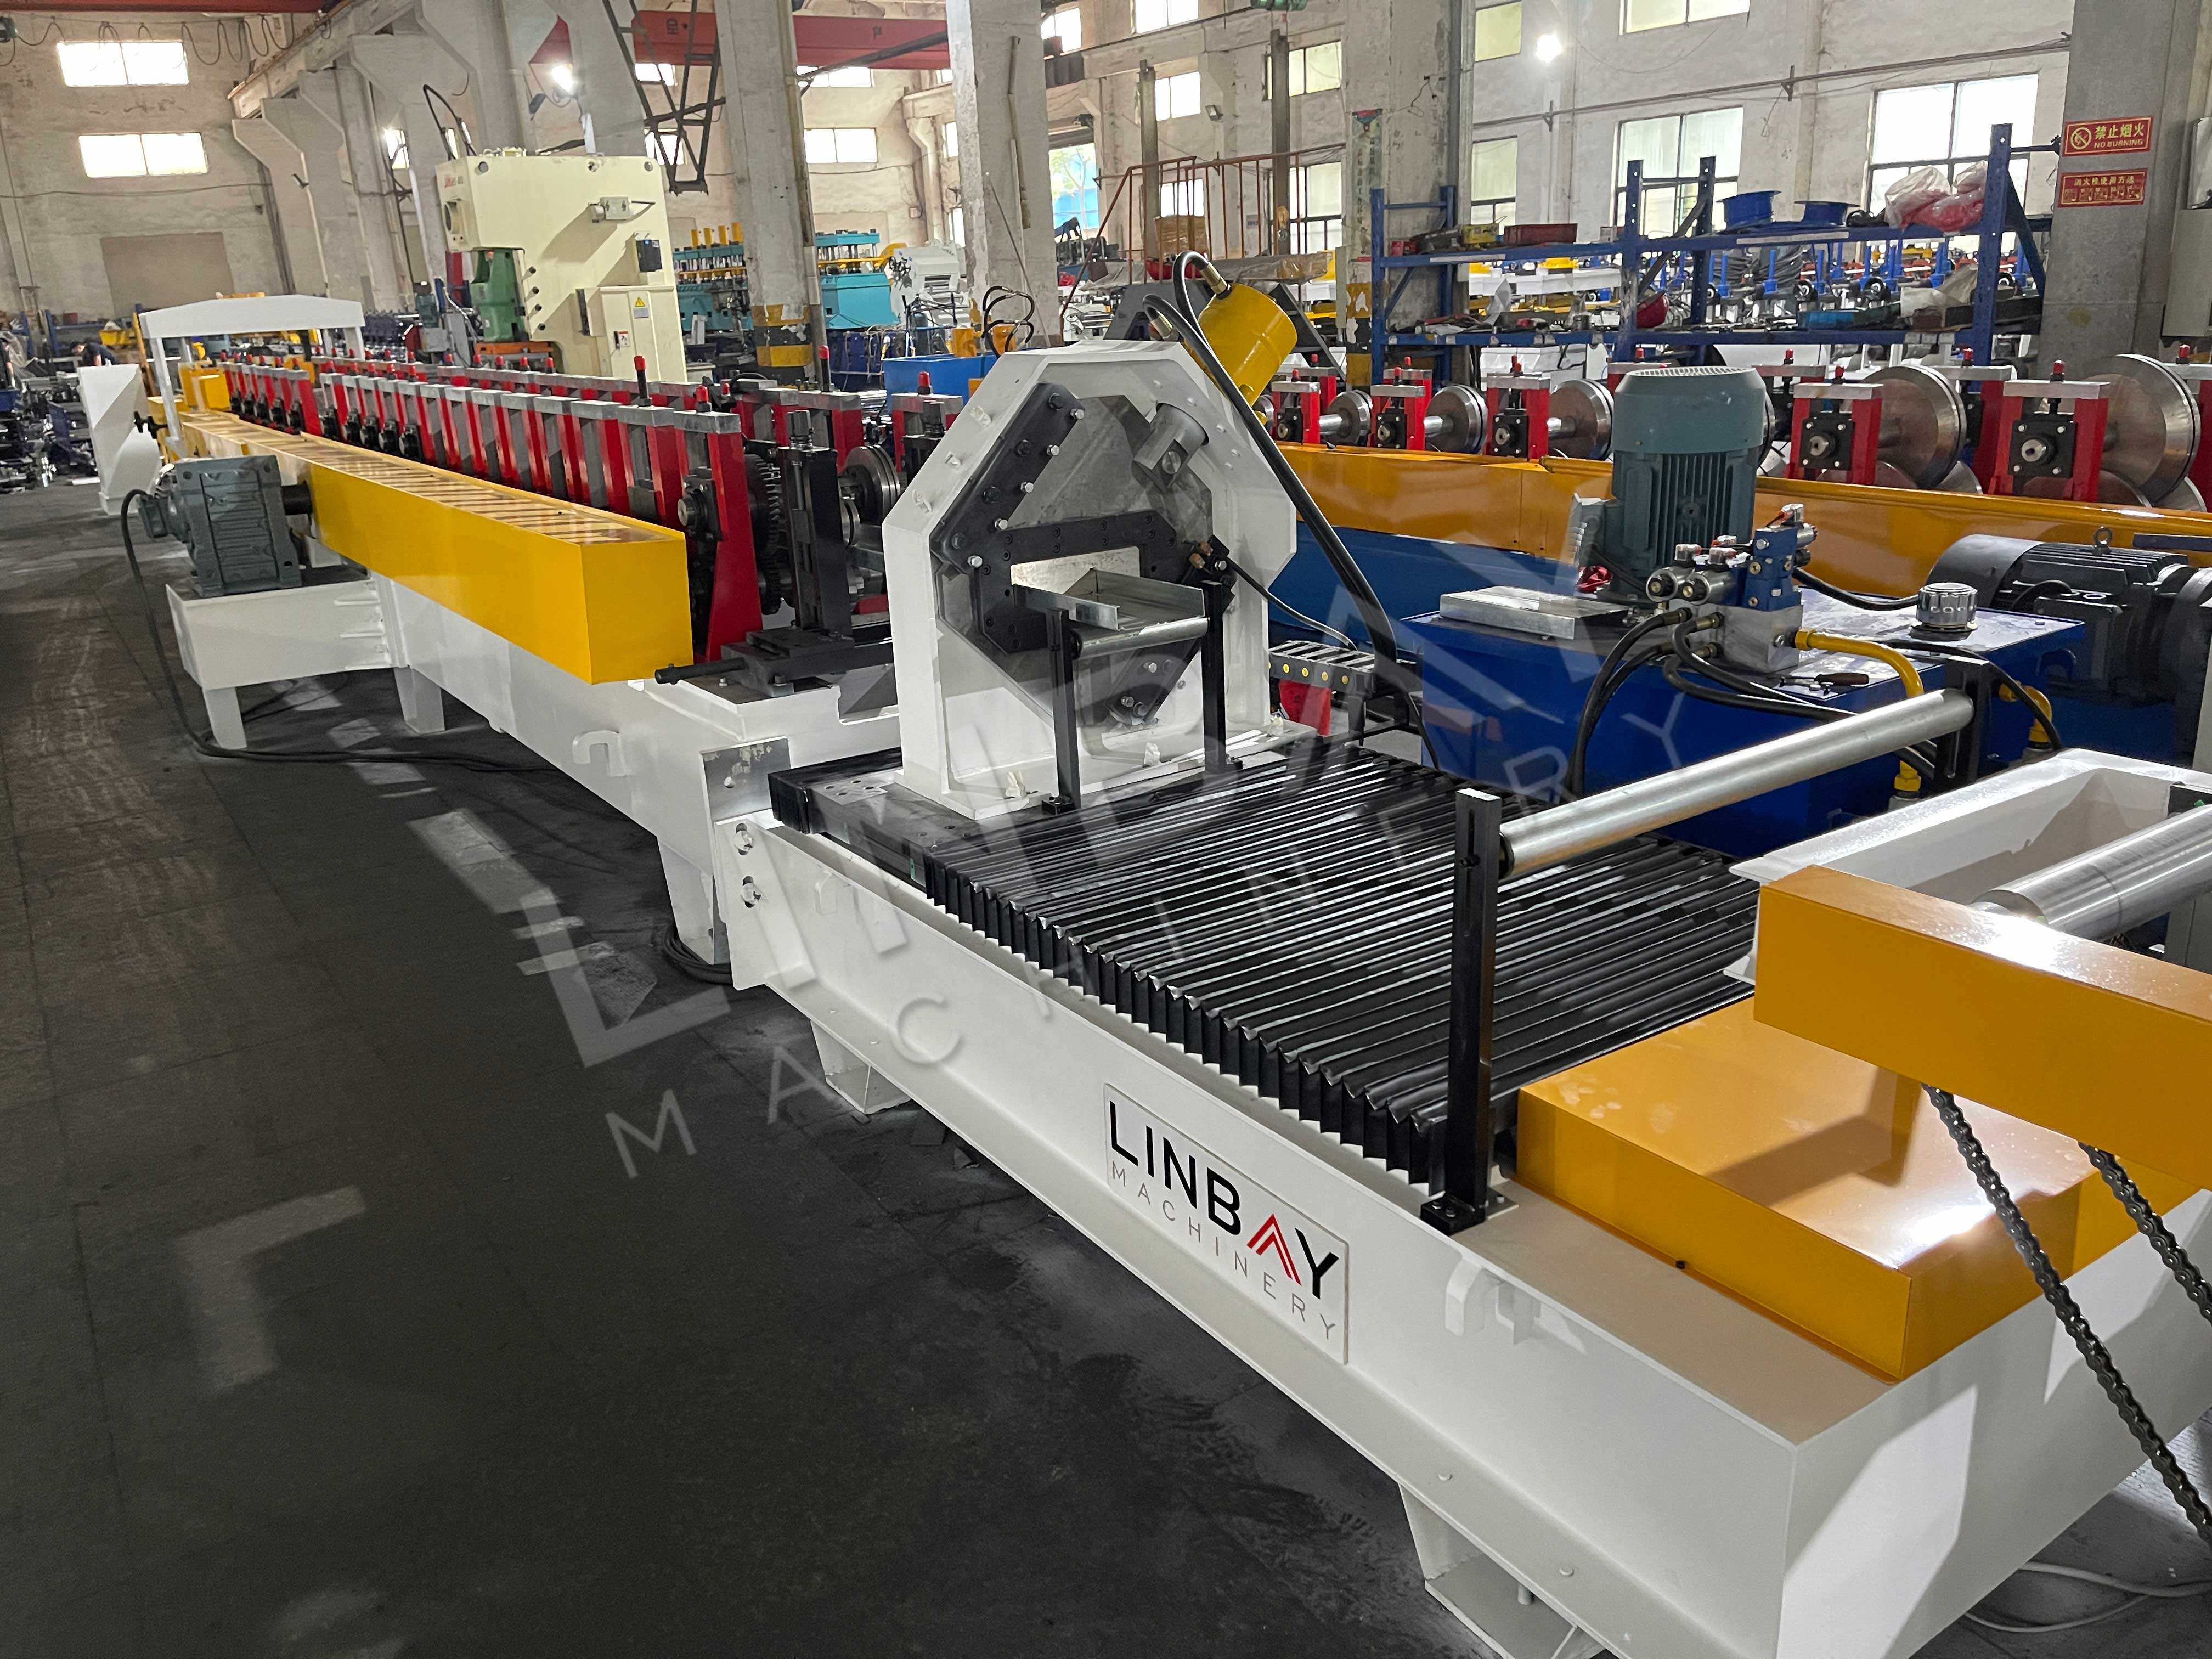 LINBAY-Exportar la Máquina Perfiladora de Racks Industriales a Vietnam